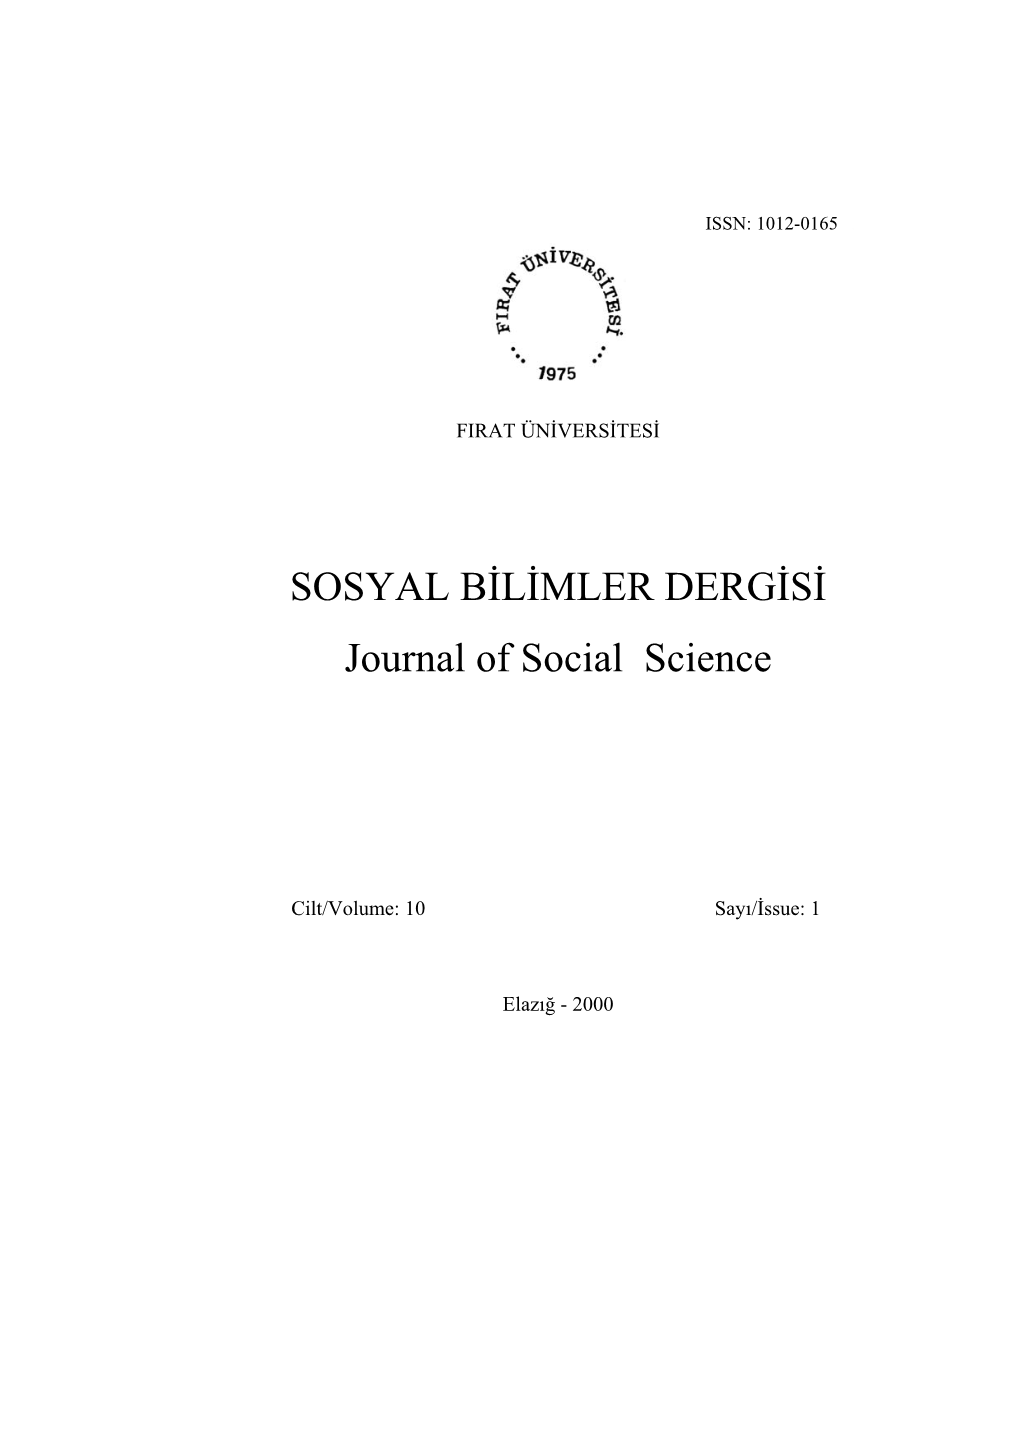 SOSYAL BİLİMLER DERGİSİ Journal of Social Science